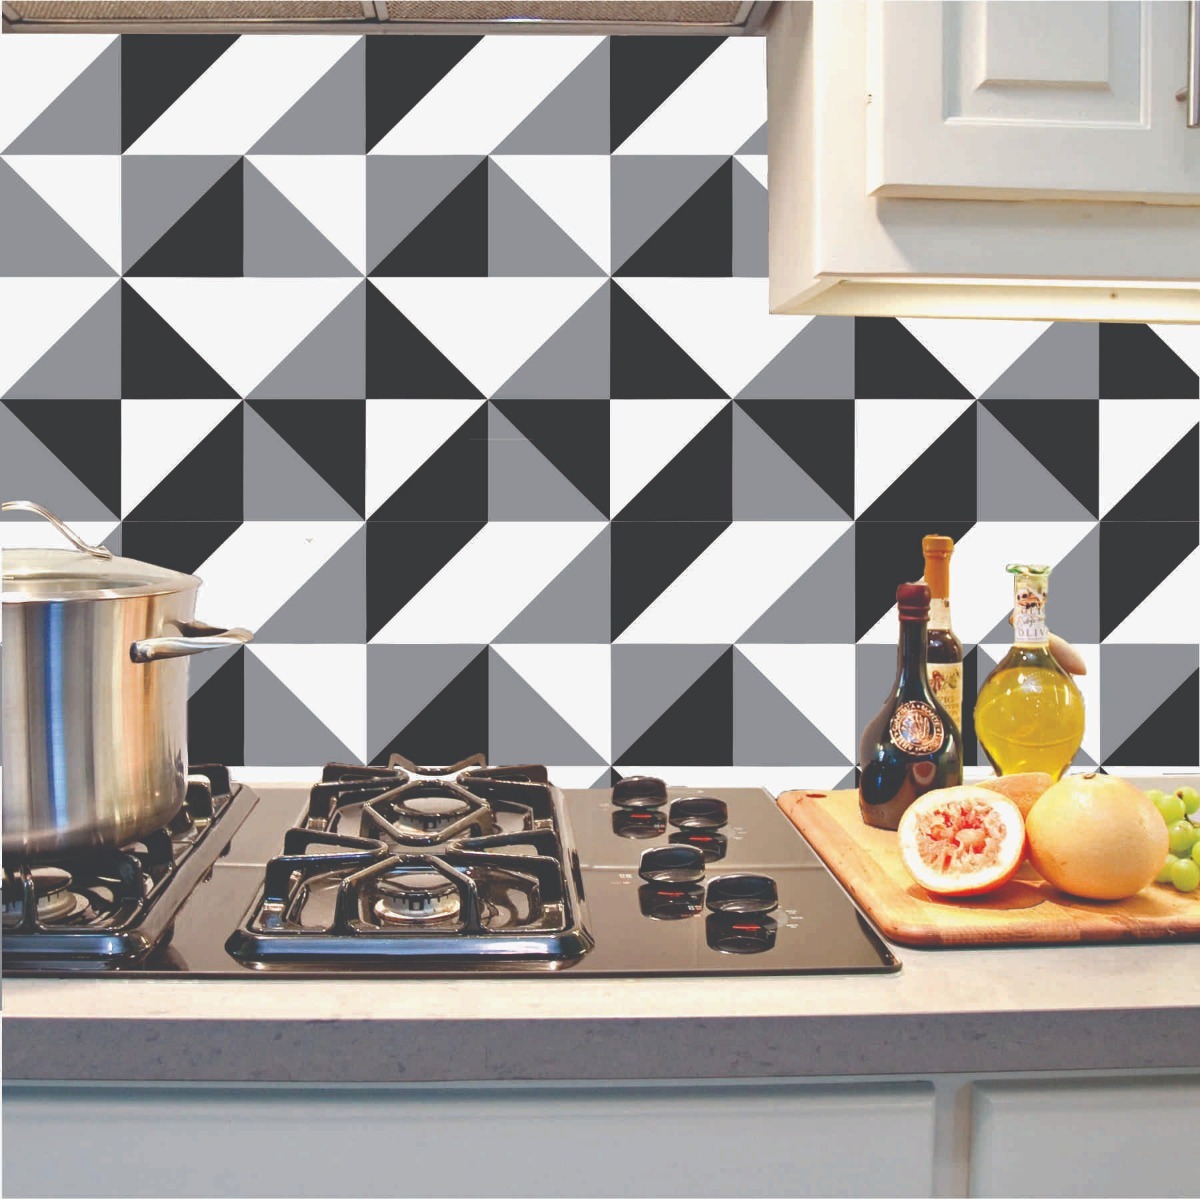 Papel de parede adesivo com estampa preto e branco de formas geométricas